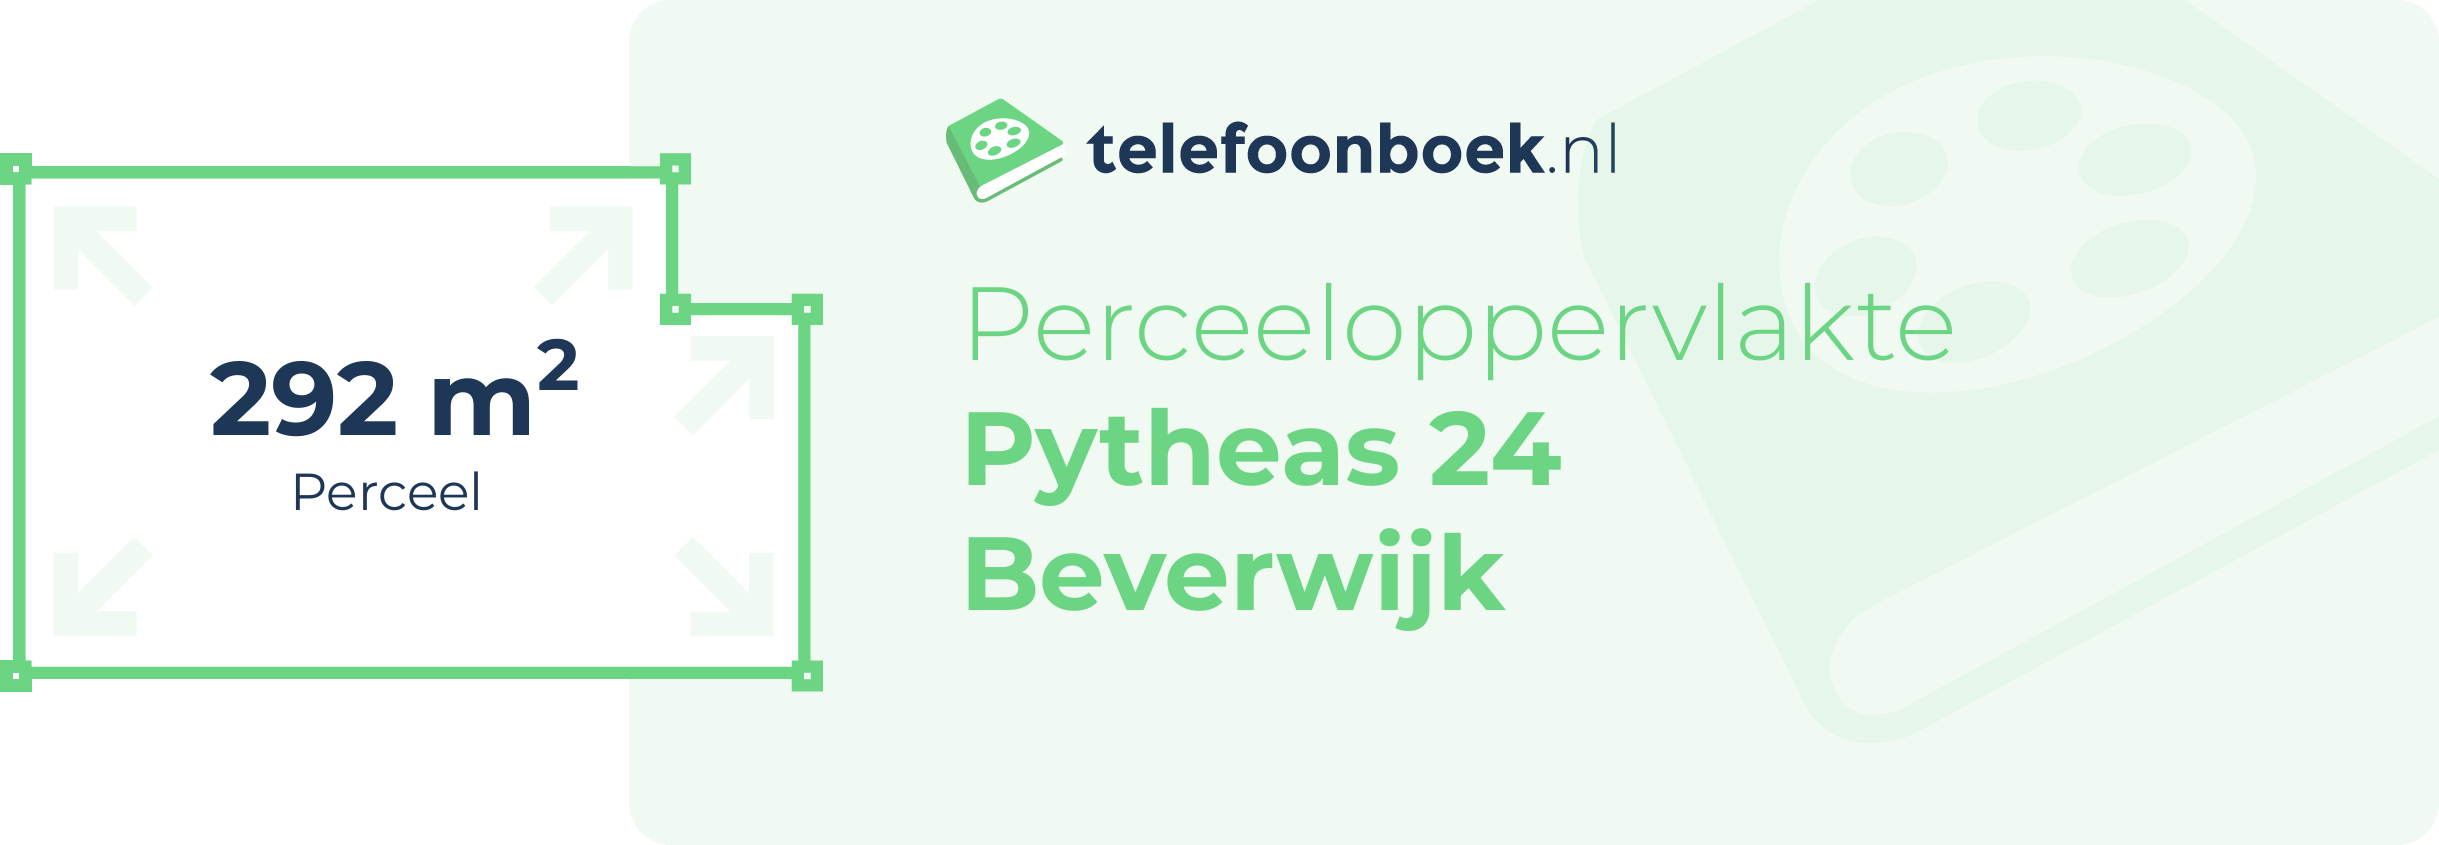 Perceeloppervlakte Pytheas 24 Beverwijk